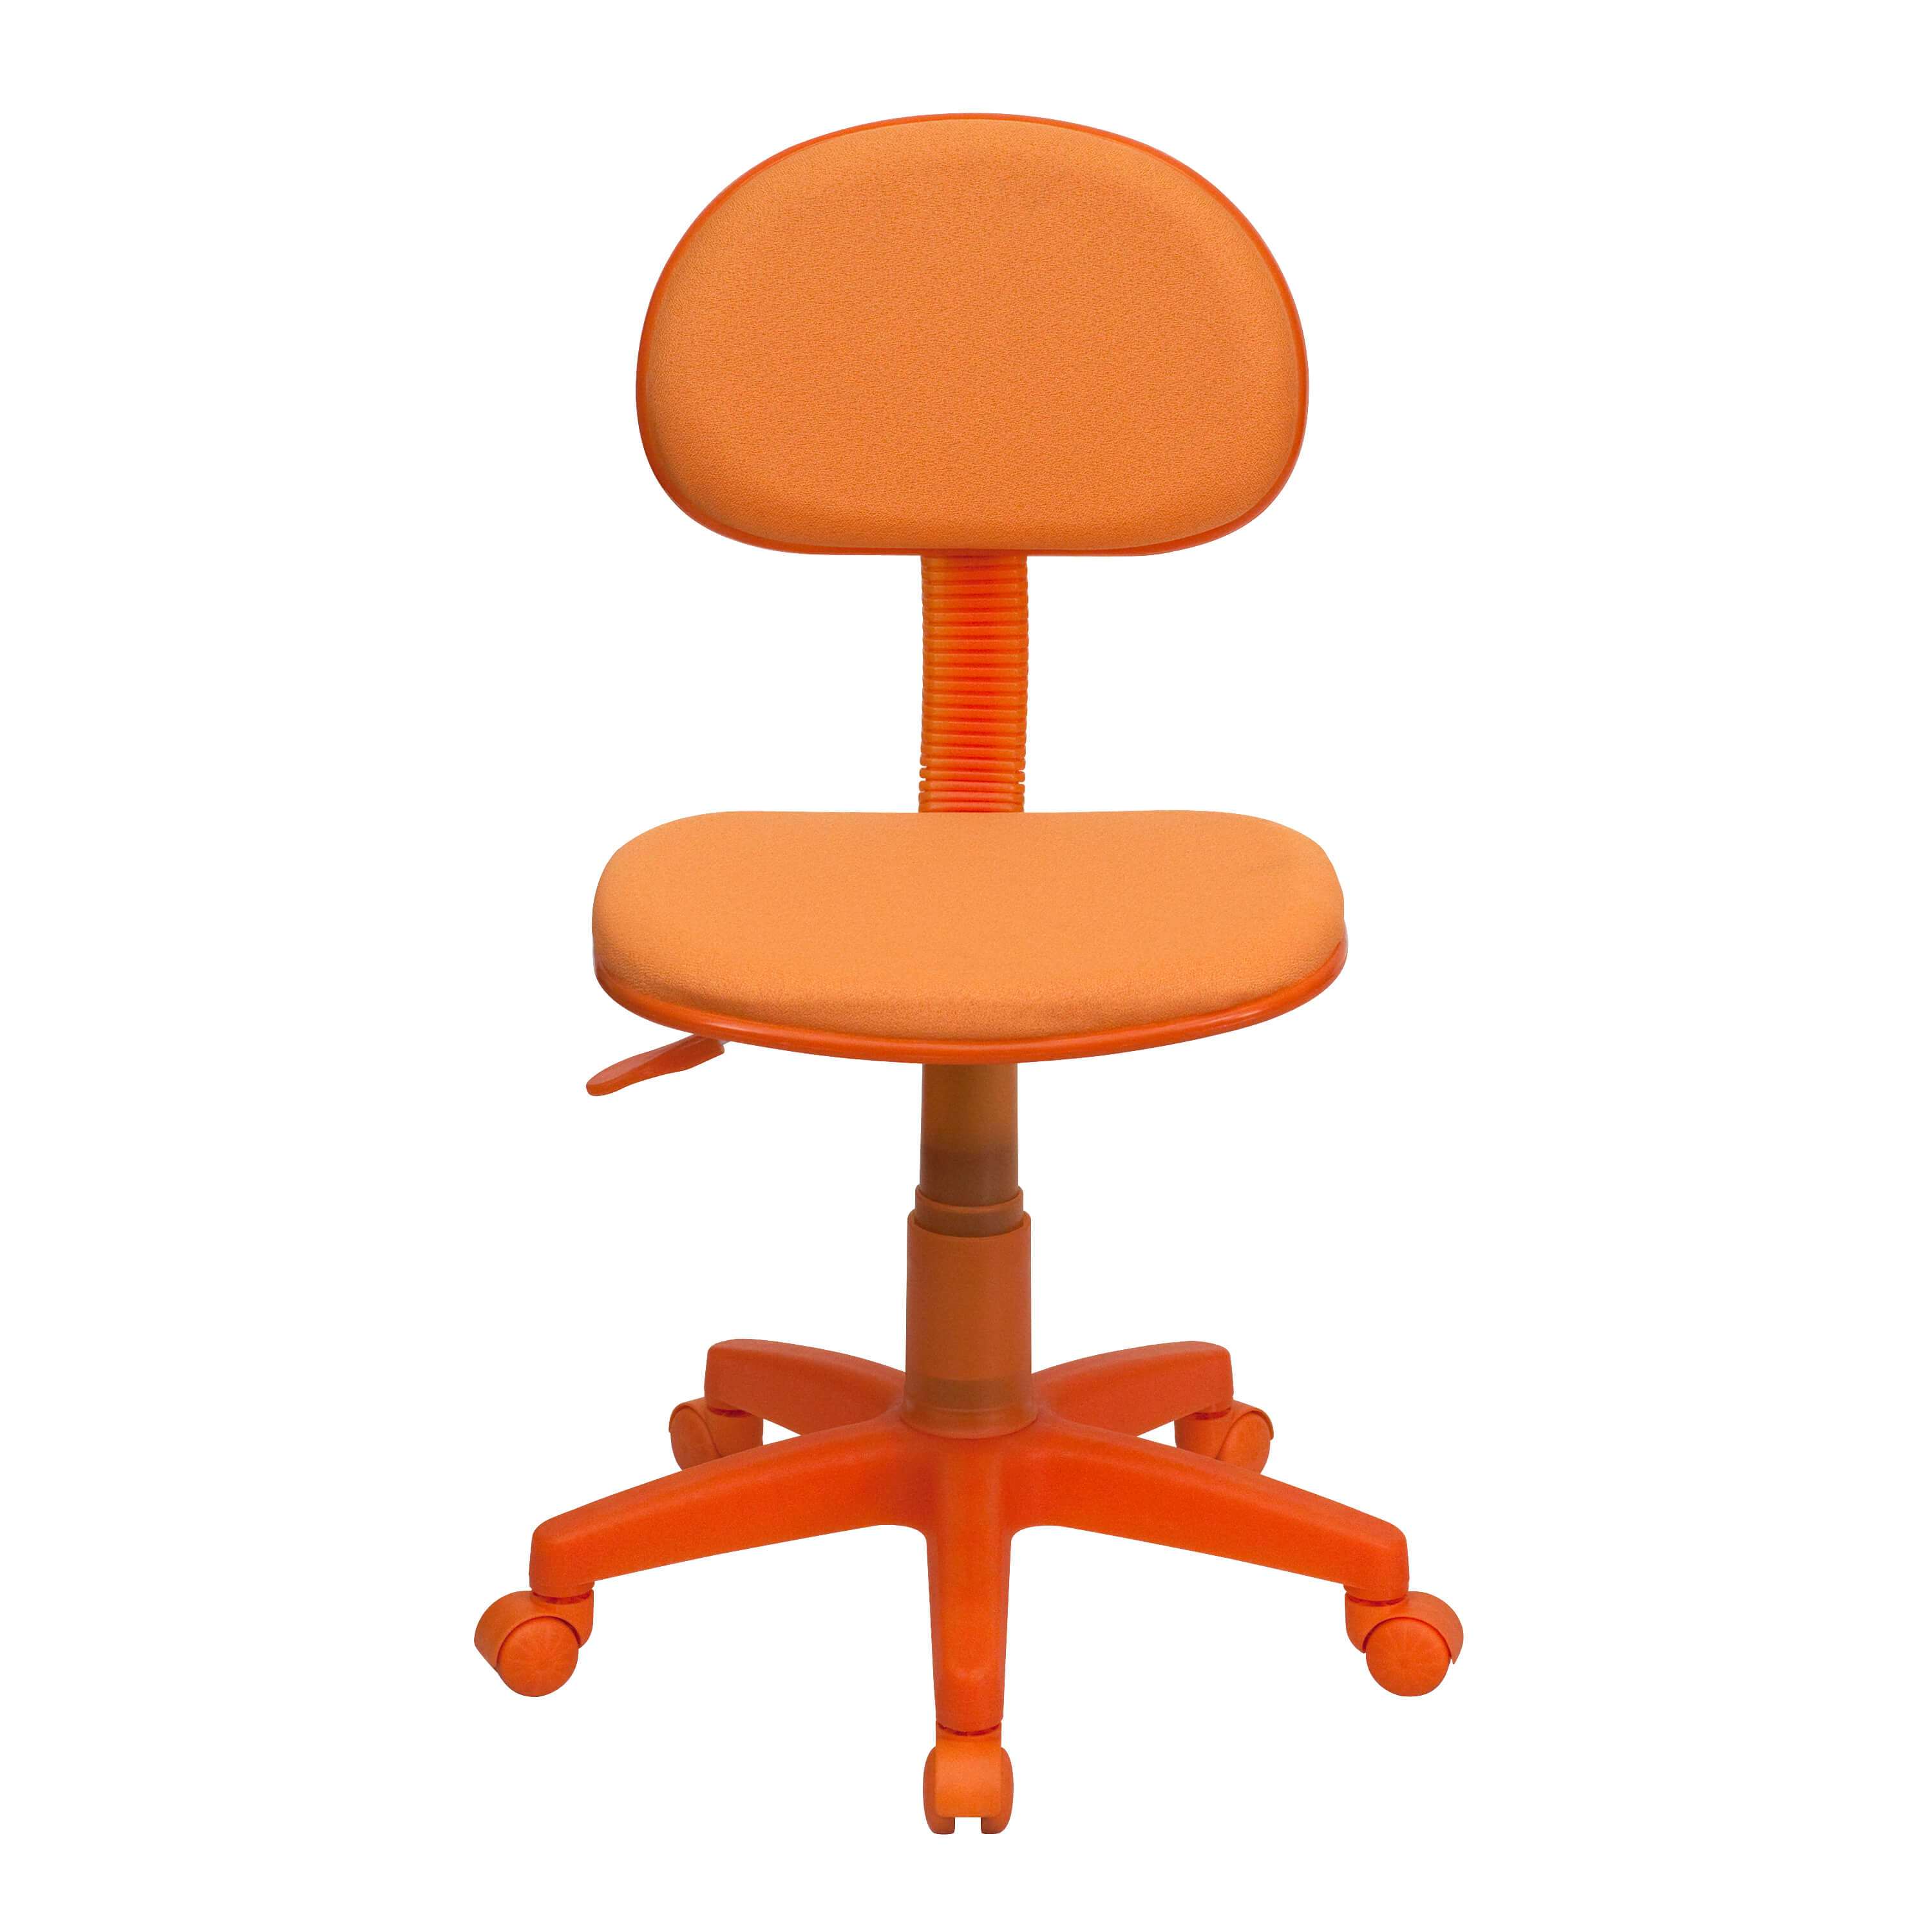 Colorful desk chairs CUB BT 698 ORANGE GG FLA